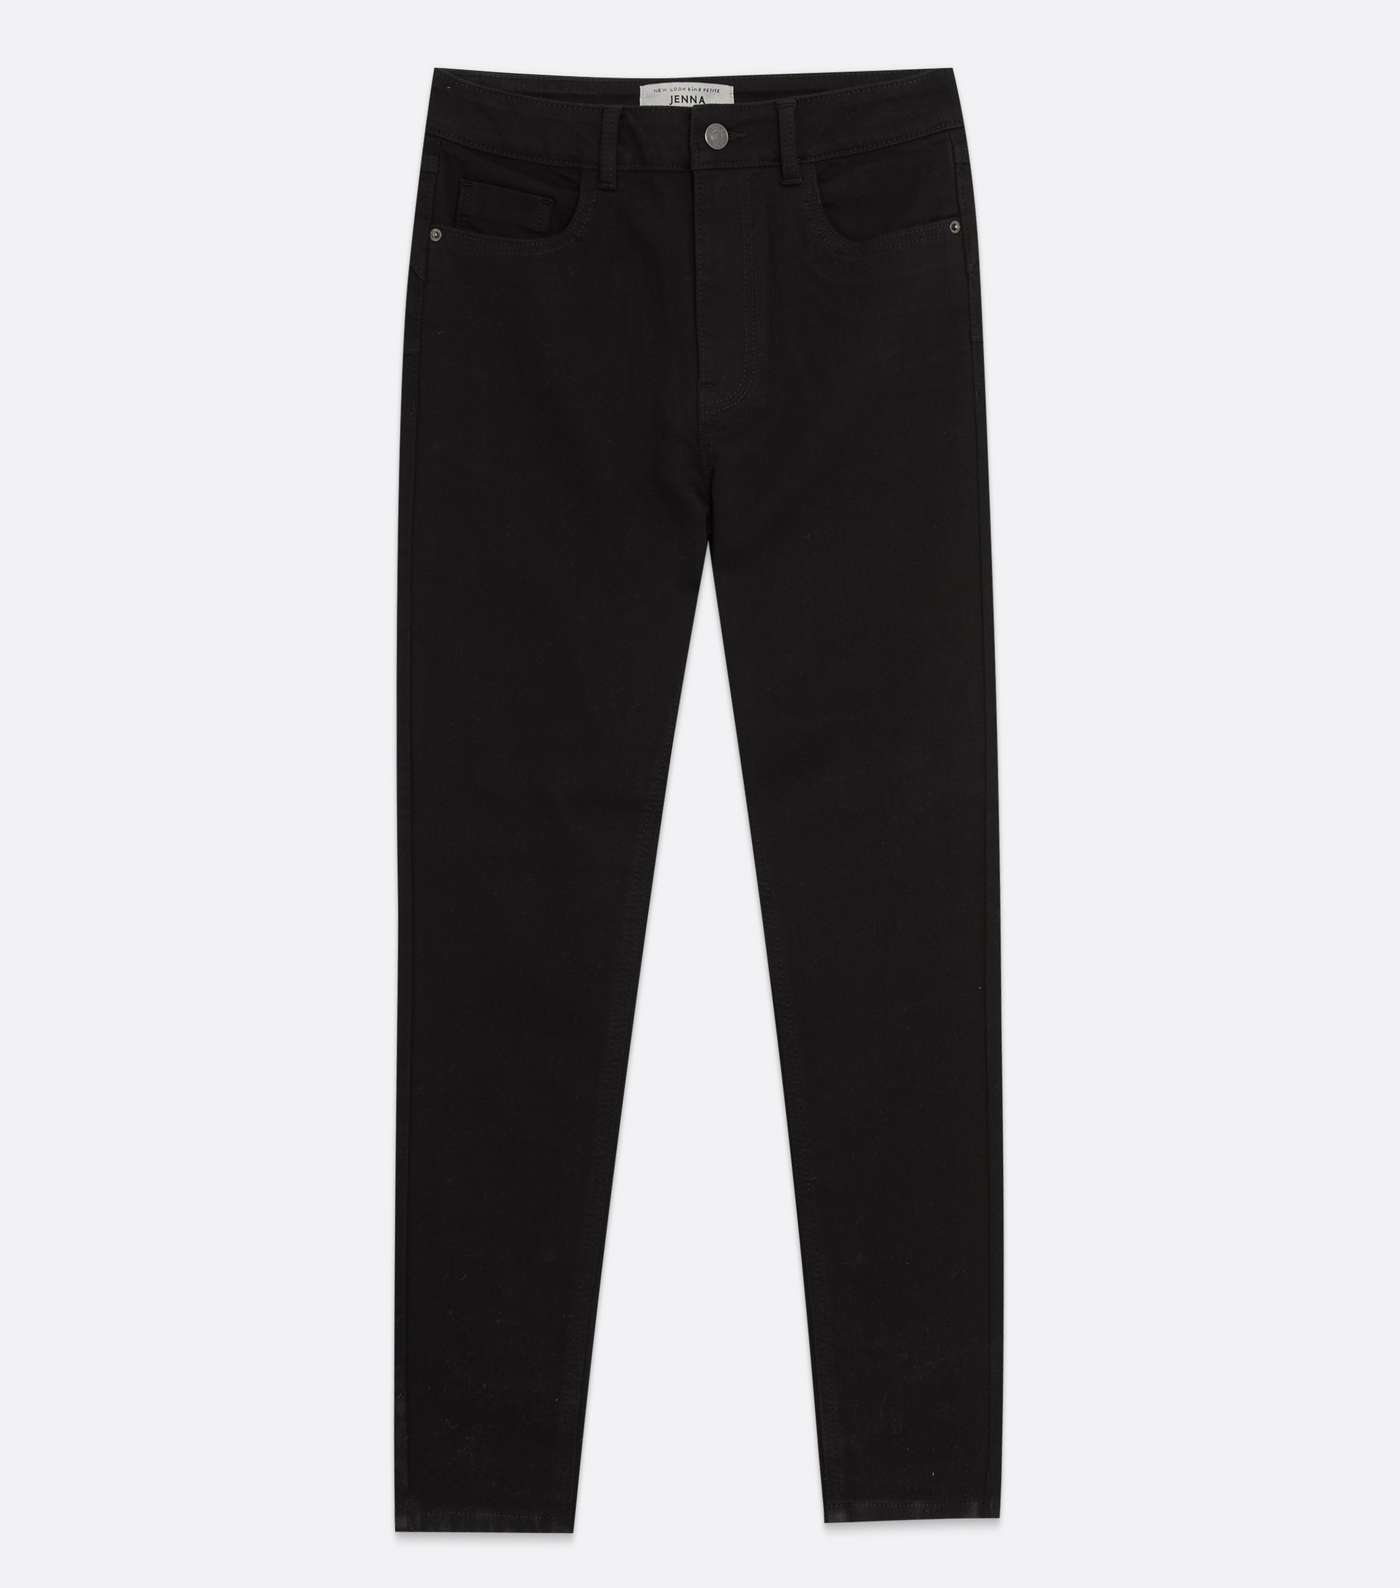 Petite Black Dark Wash Lift & Shape Jenna Skinny Jeans Image 5